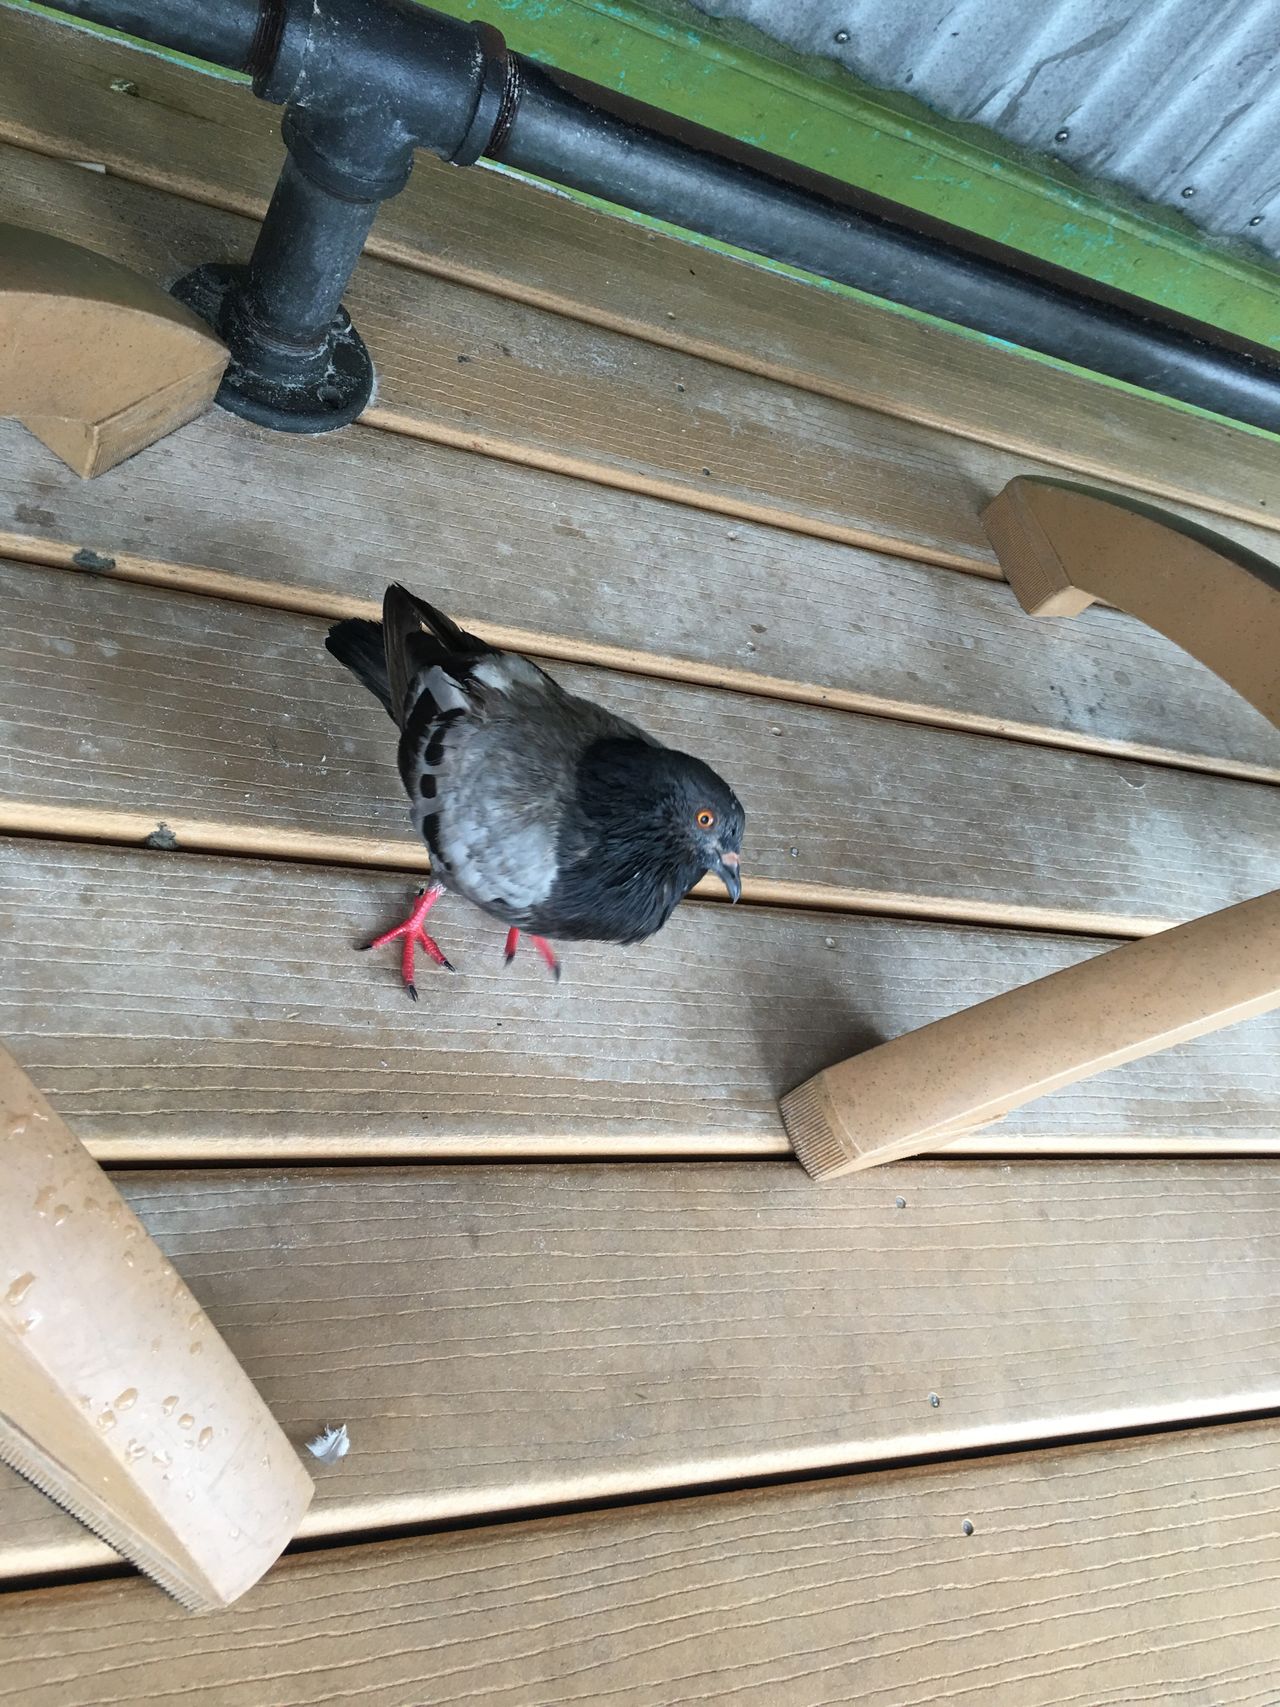 Pigeon on the floor